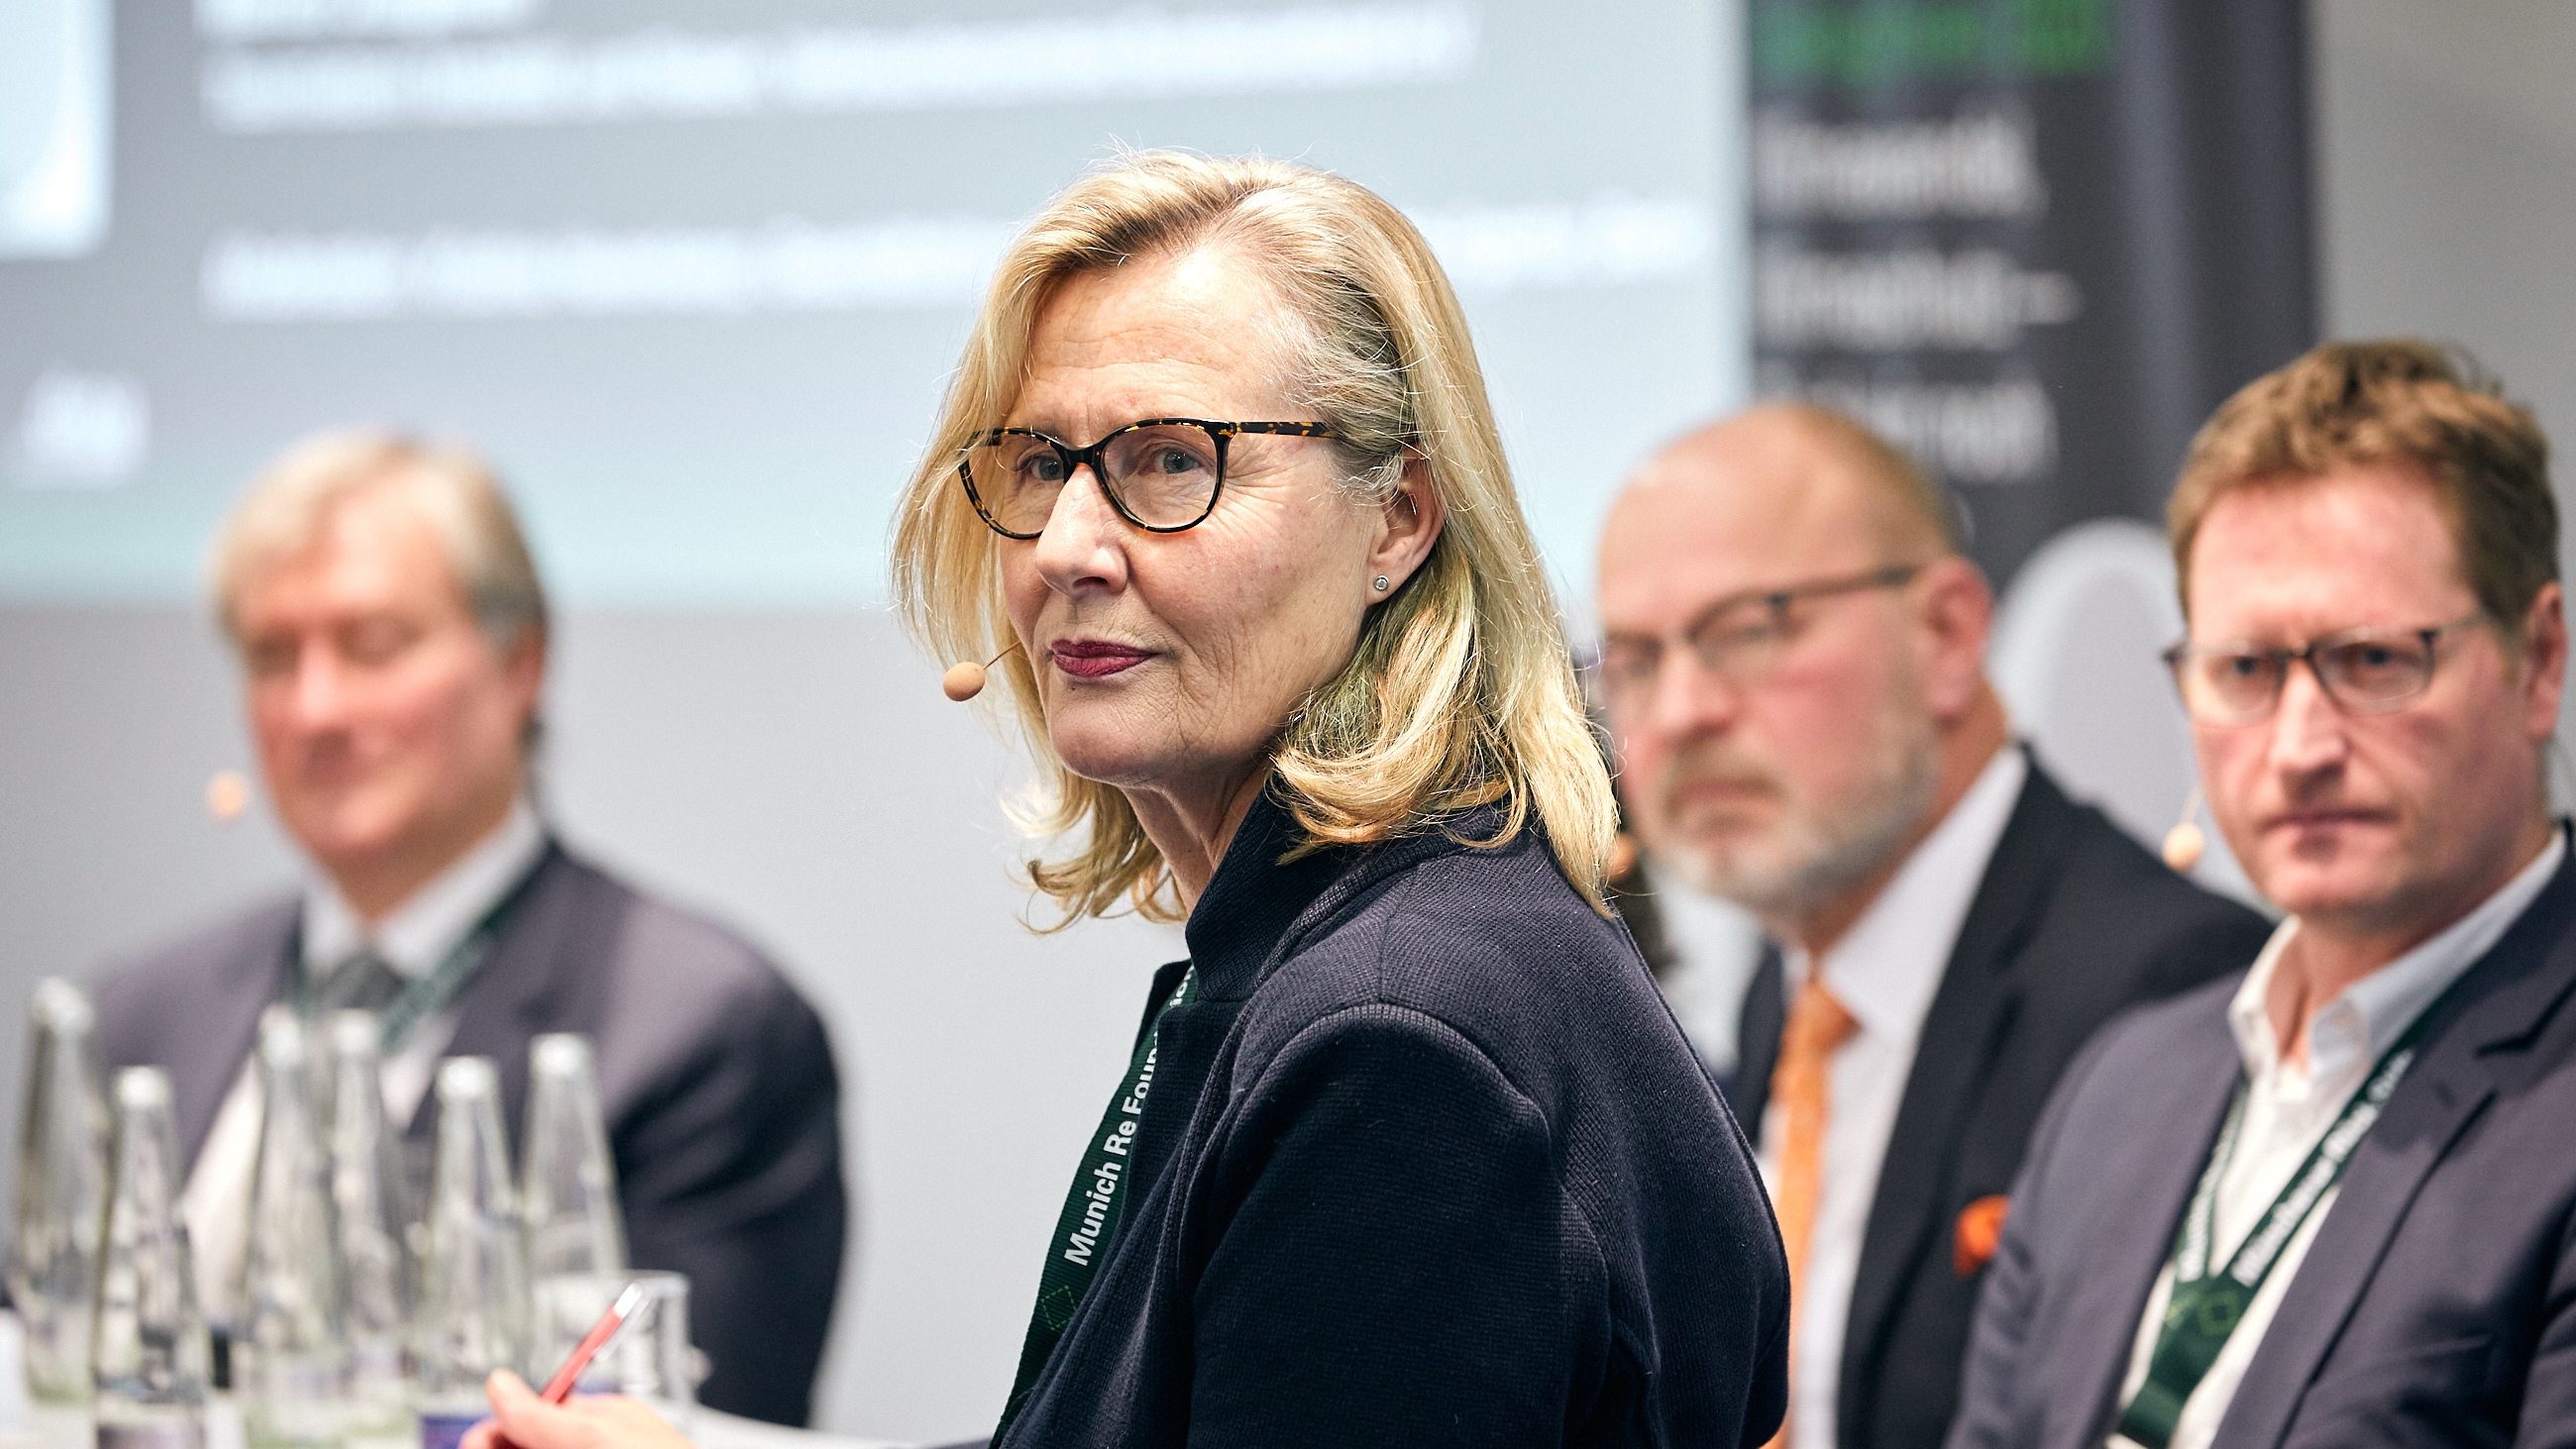 Kristina Haverkamp, managing director of dena, Berlin, moderated the discussion.